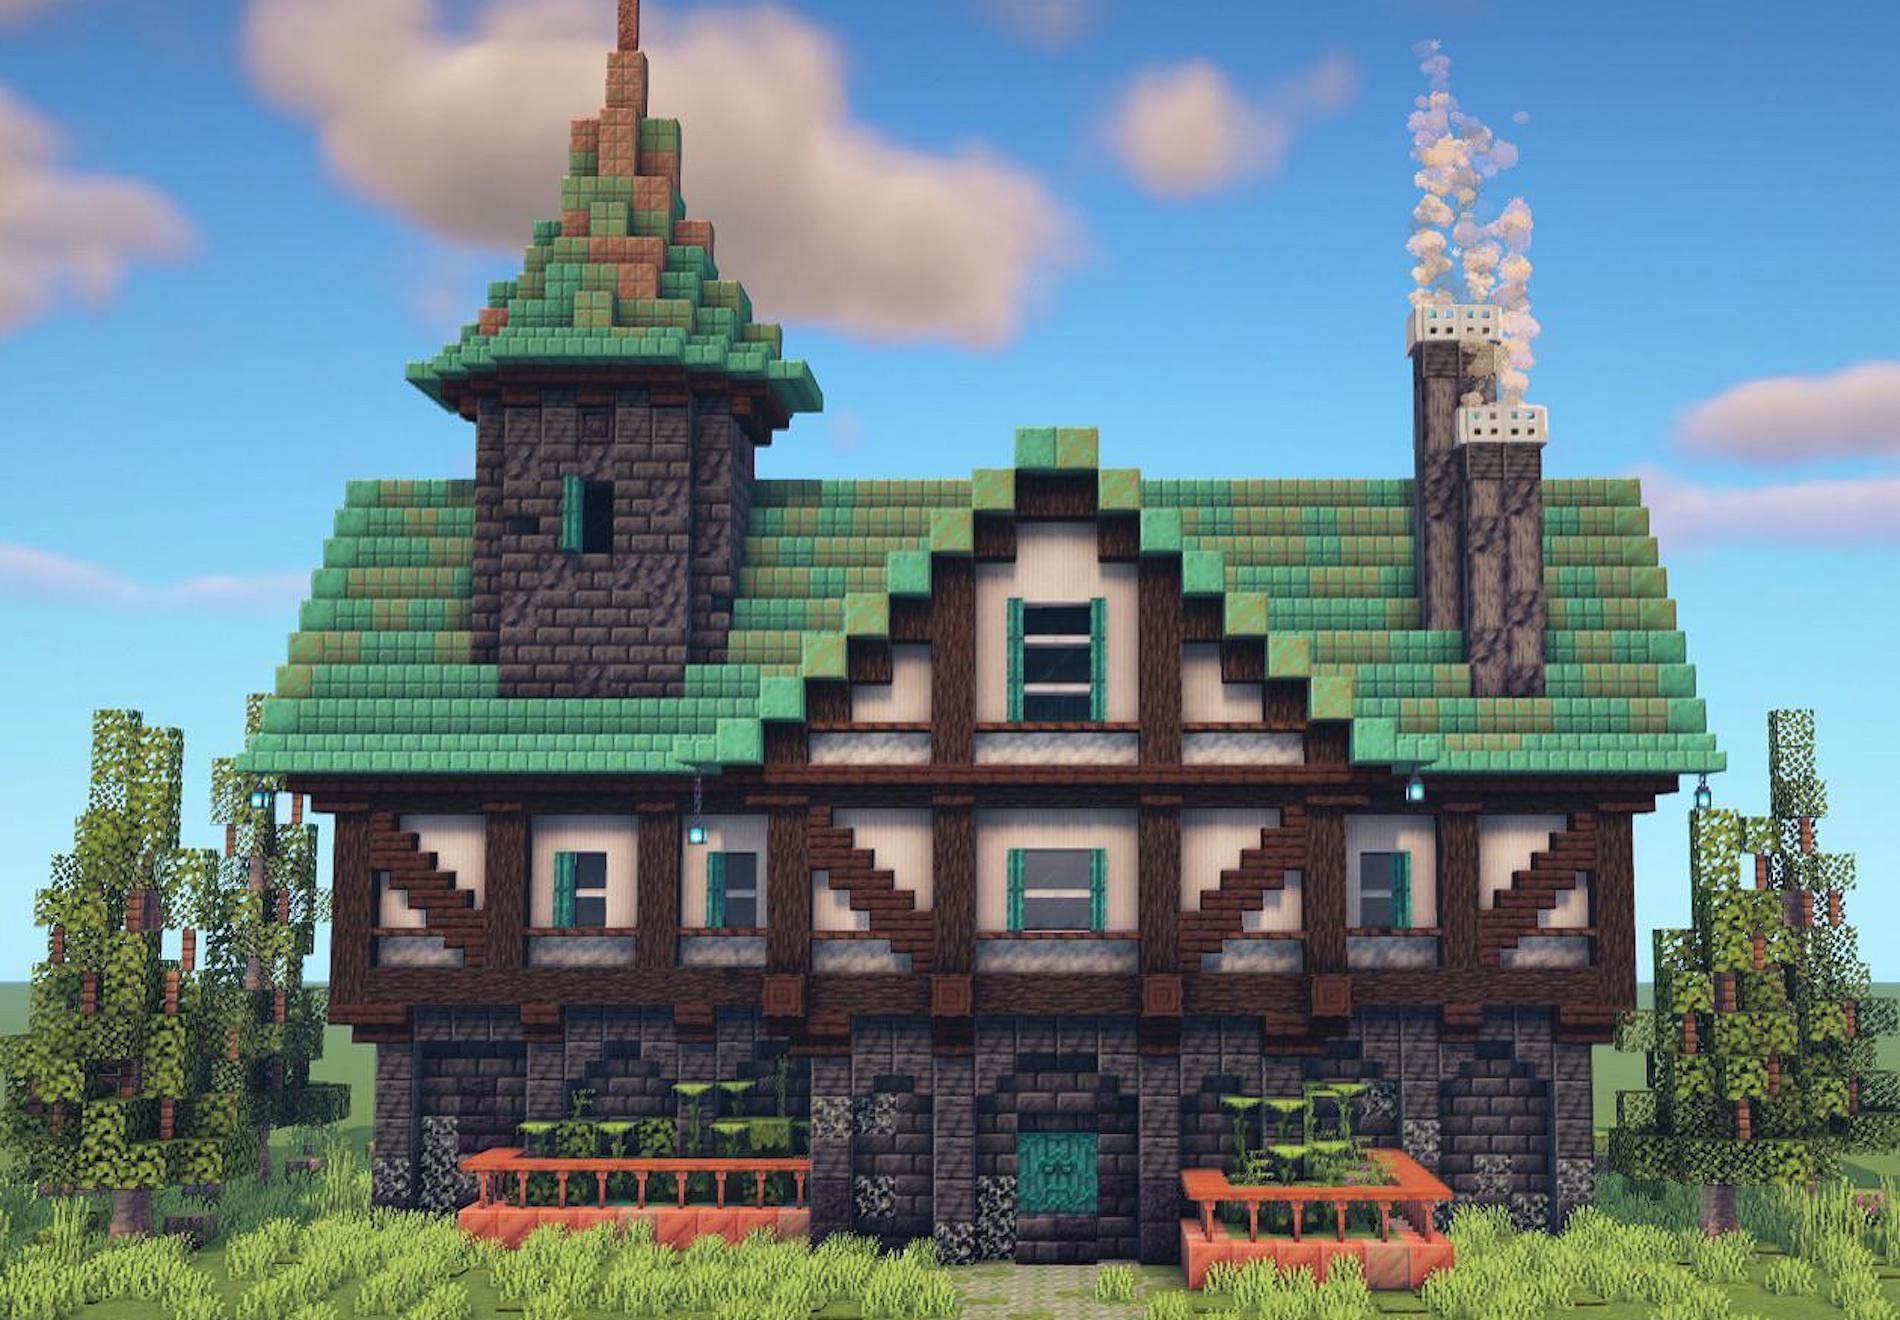 Tudor house design [Image via u/Swordself_MC on Reddit]